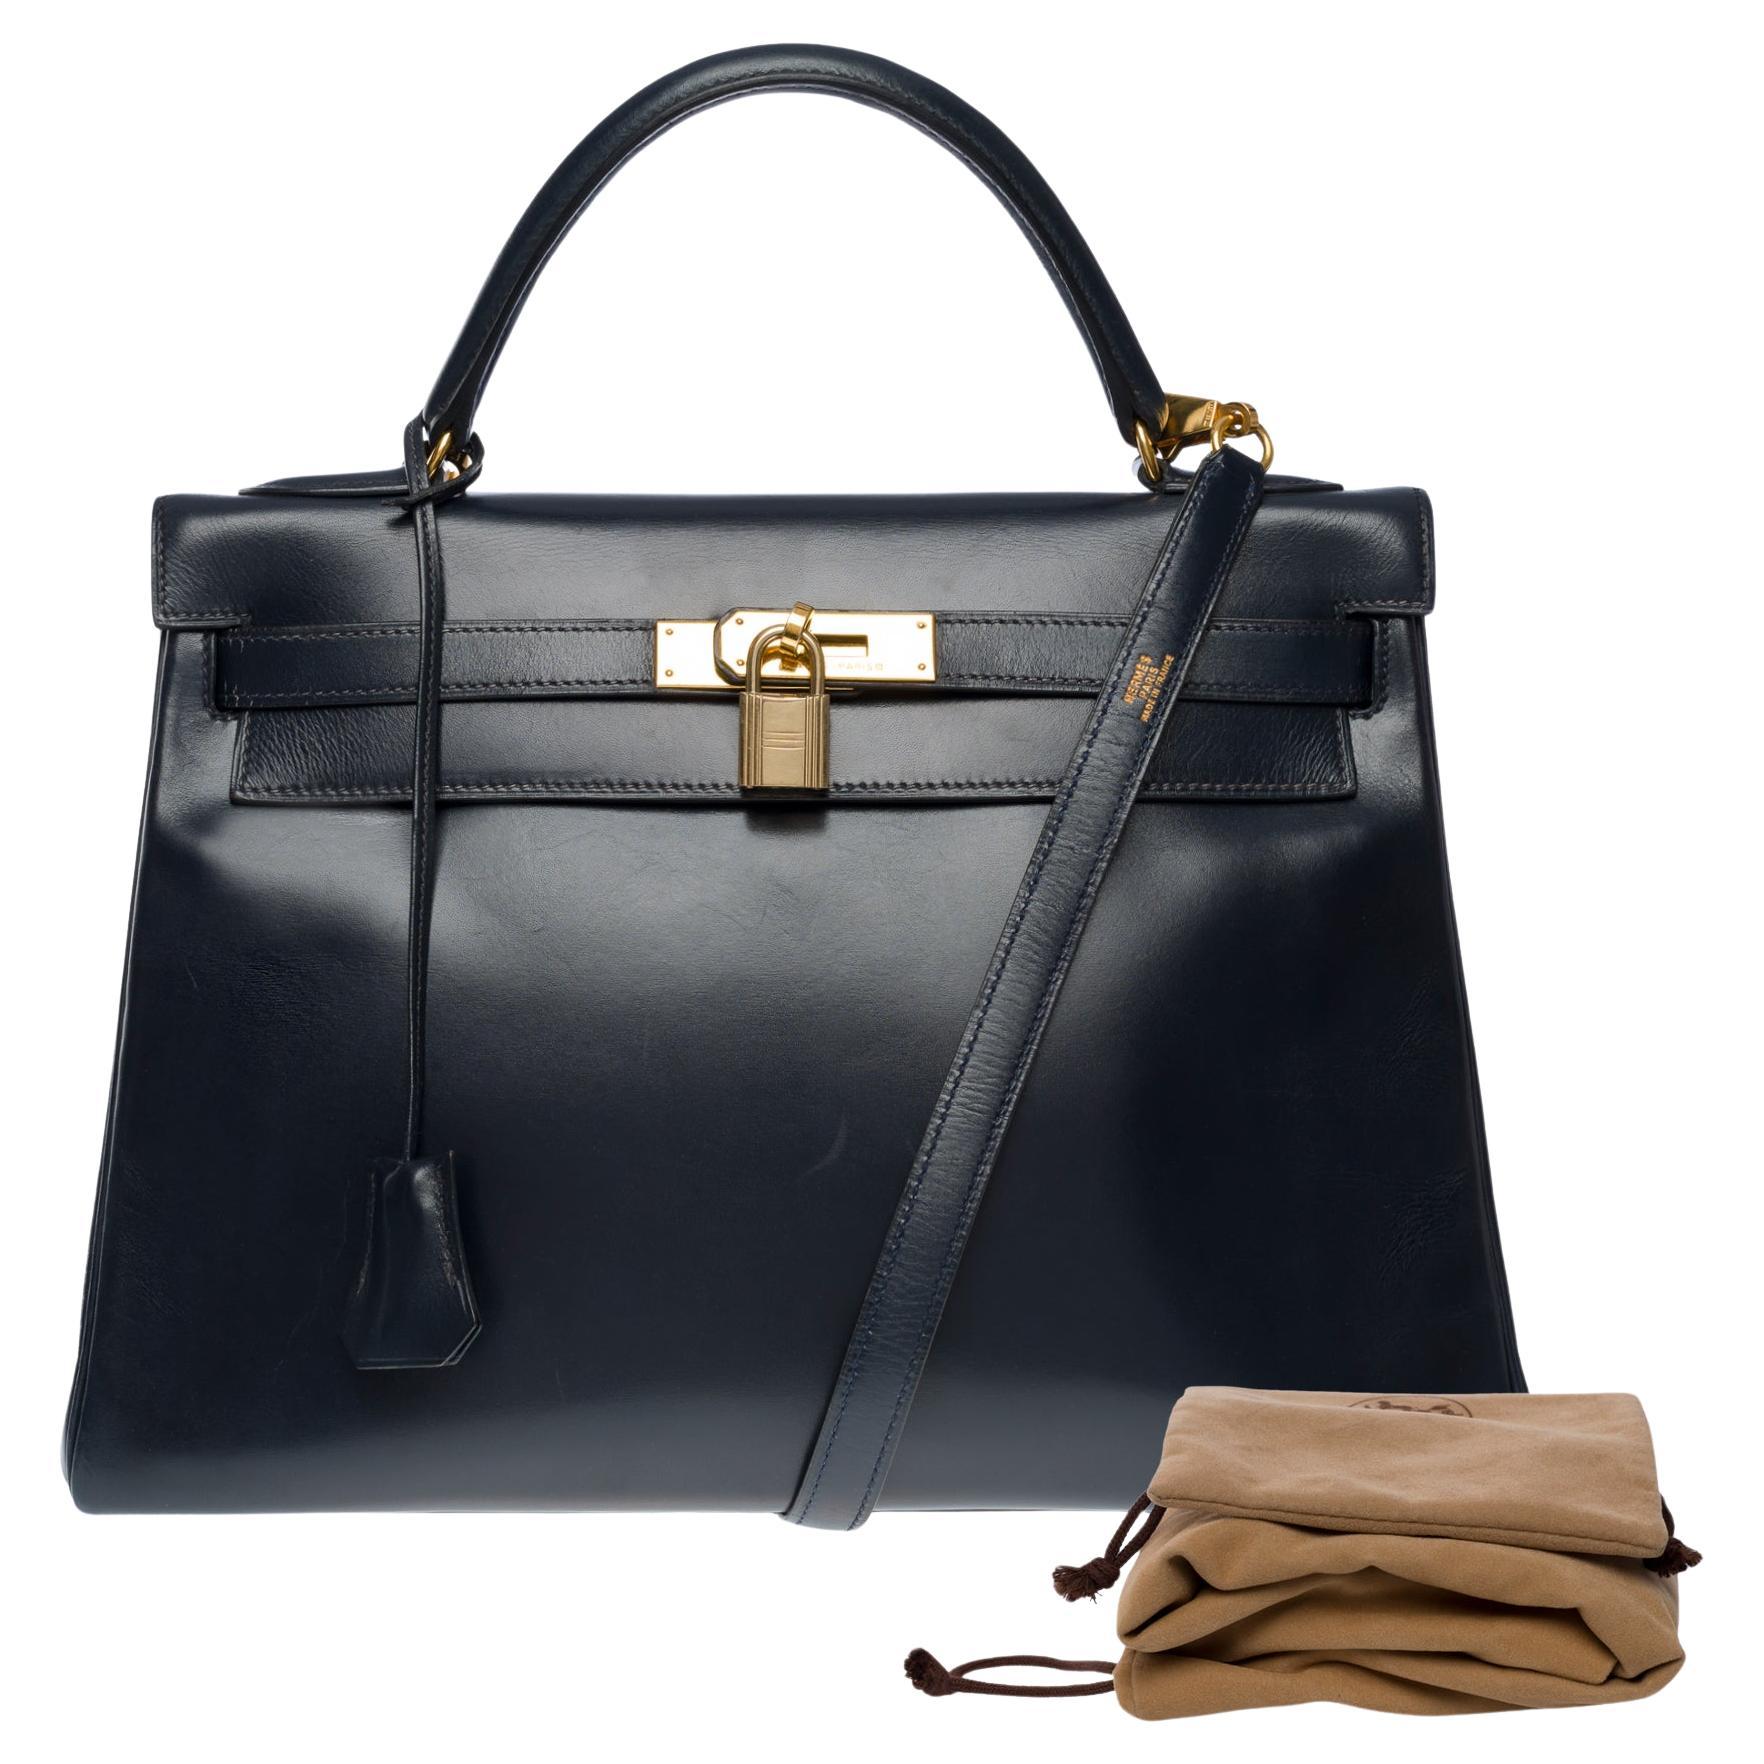 Hermès Kelly 32 retourne handbag strap in Navy Blue box calfskin leather, GHW